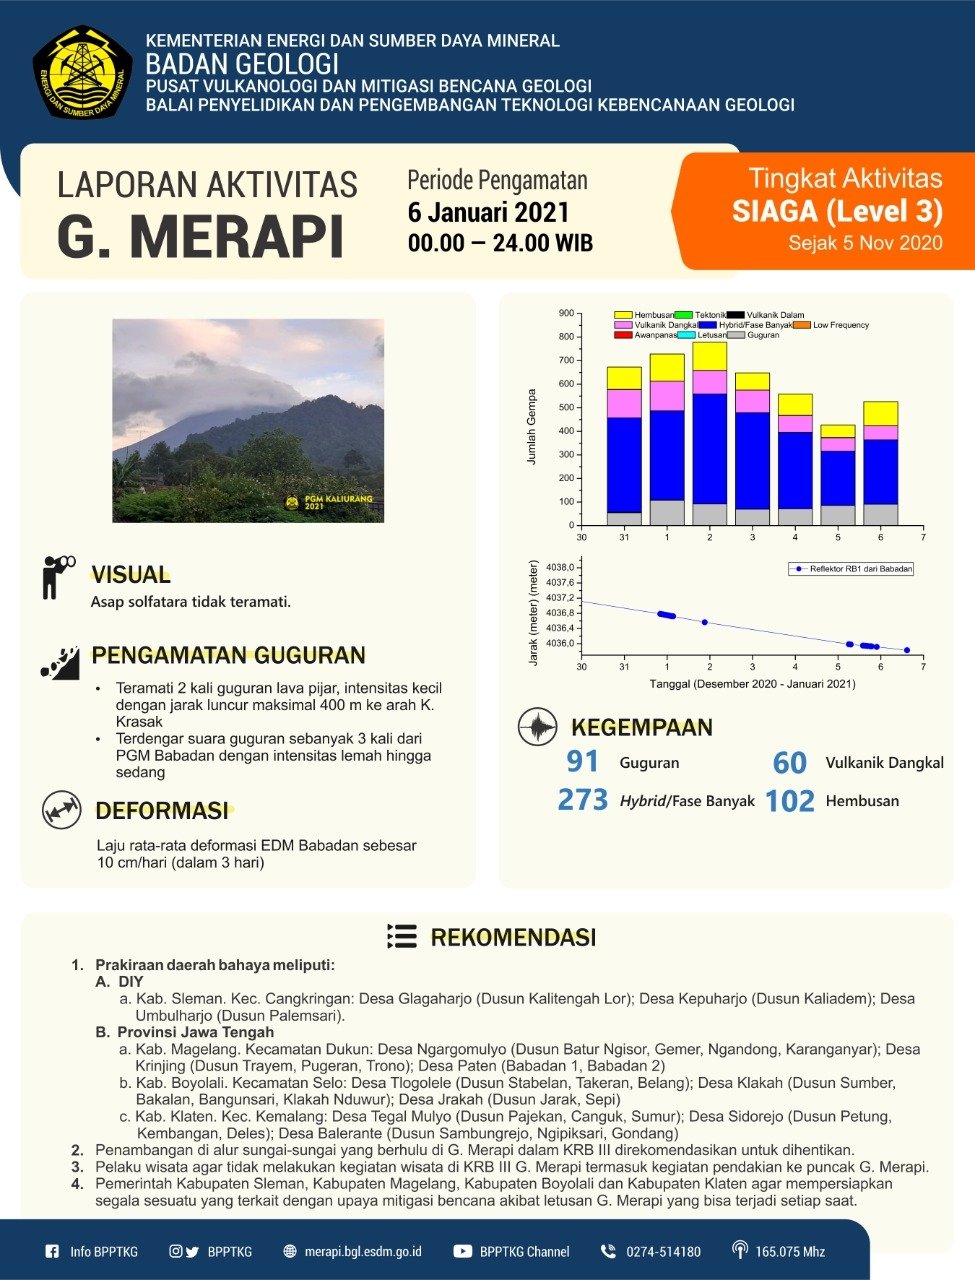 Dr.Eng. Mirzam Abdurrachman, S.T., M.T. : Pelajaran tentang Pola Aktivitas Gunung Merapi Usai Letusan 2010 Silam